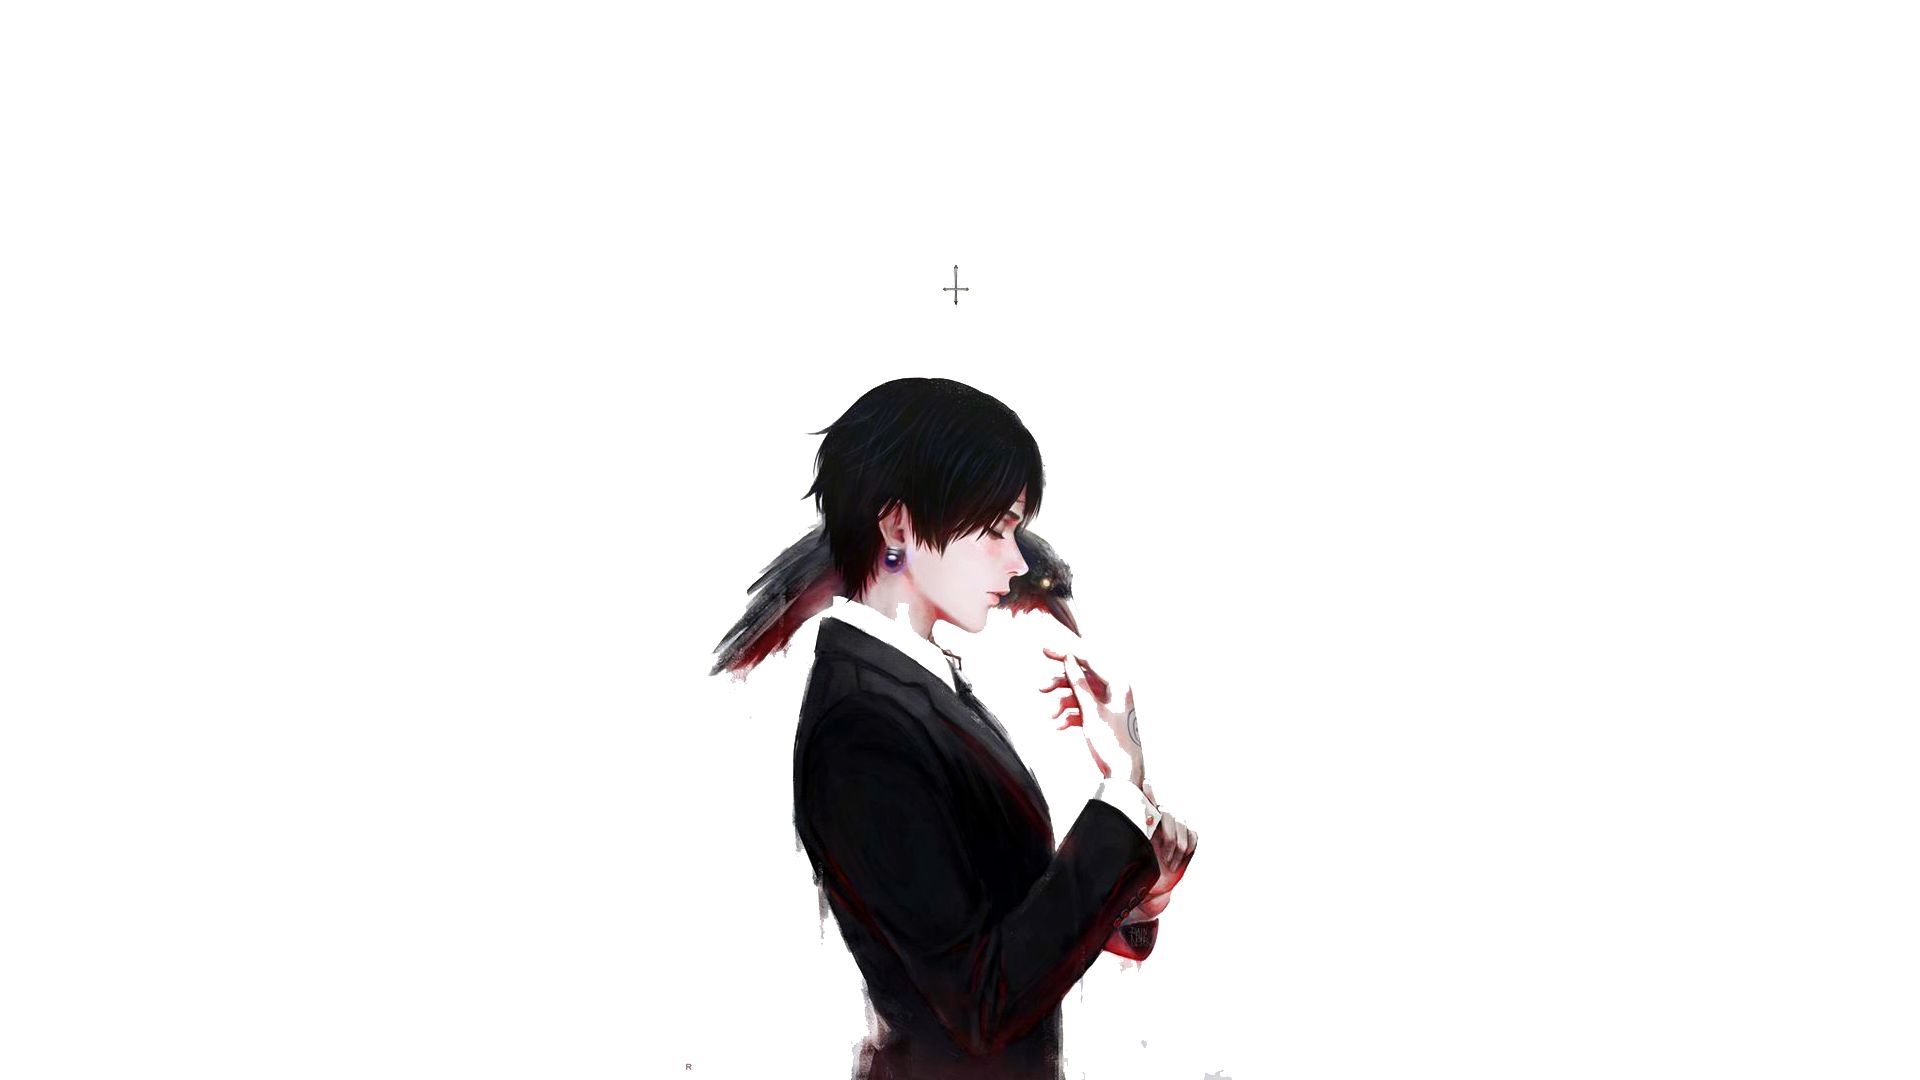 Wallpaper ID 625899  Chrollo Lucifer anime Hunter x Hunter 720P free  download